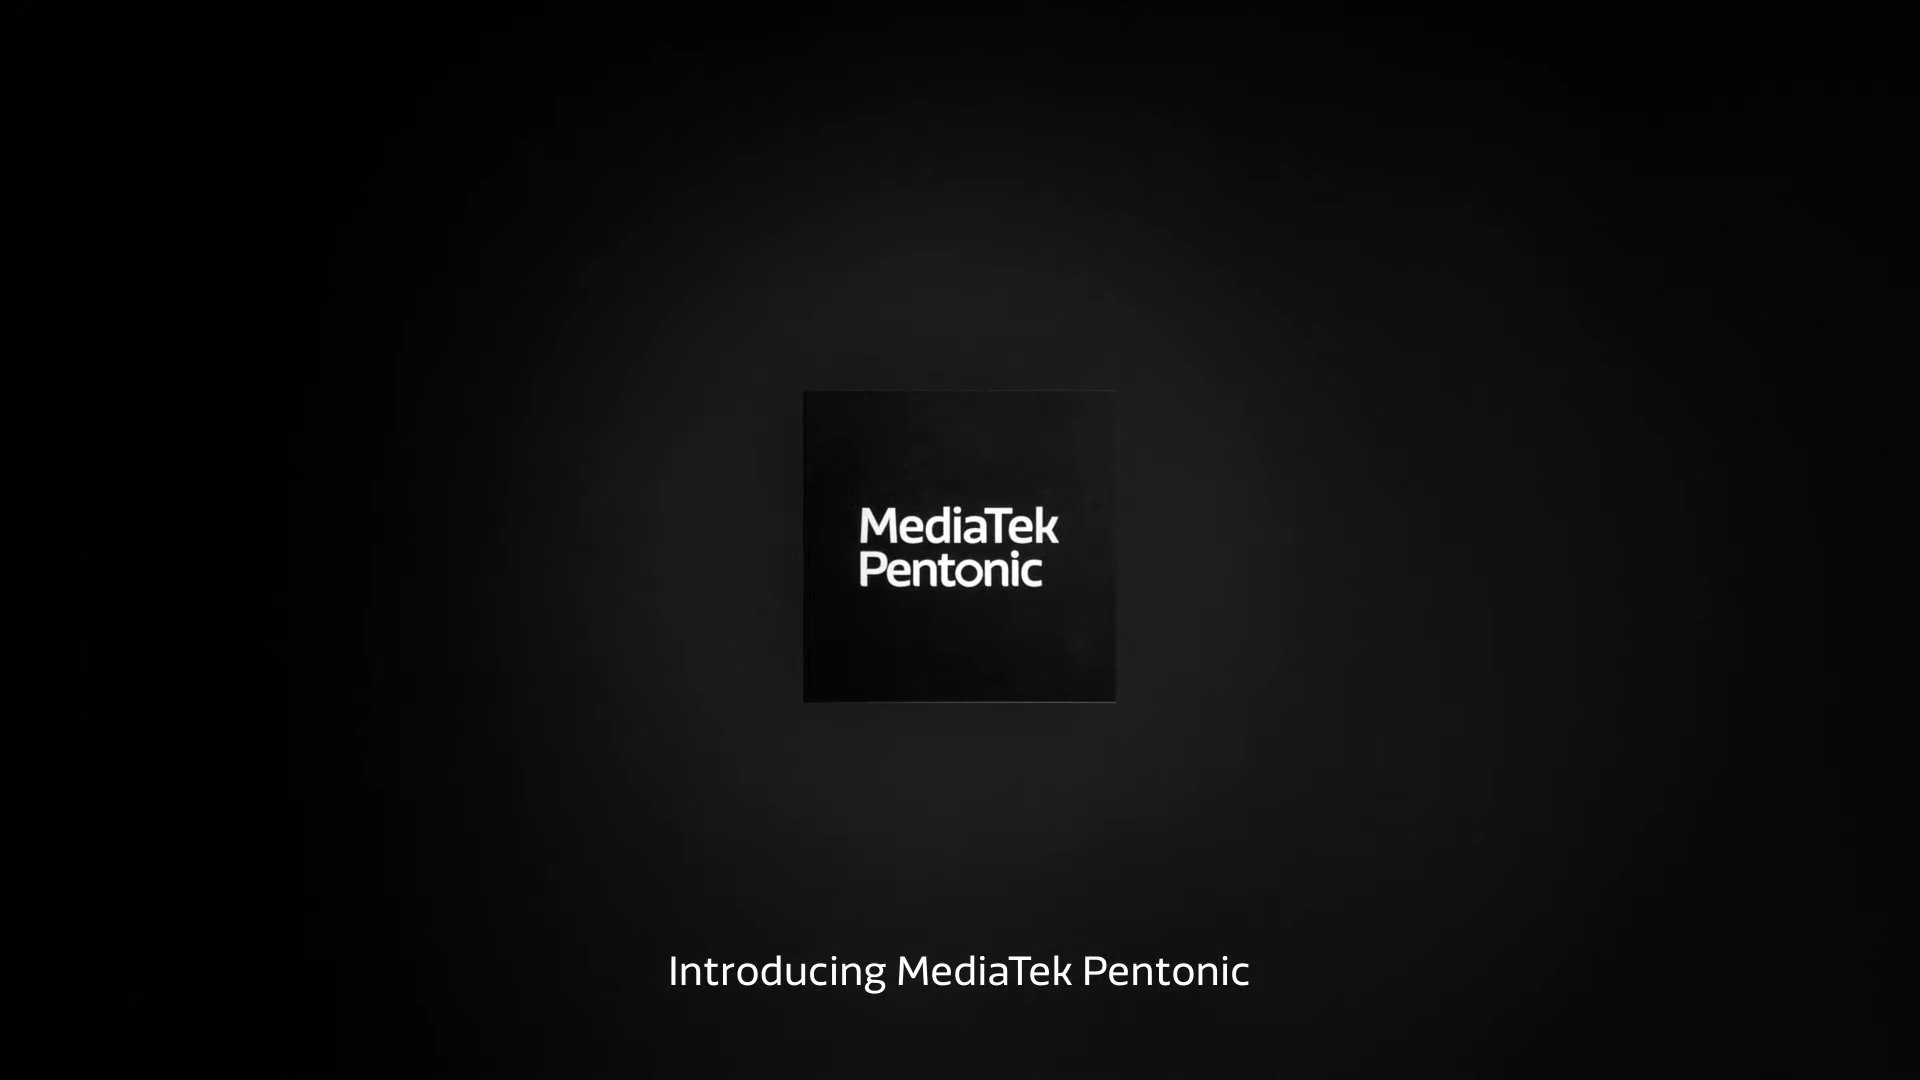 MediaTek Pentonic